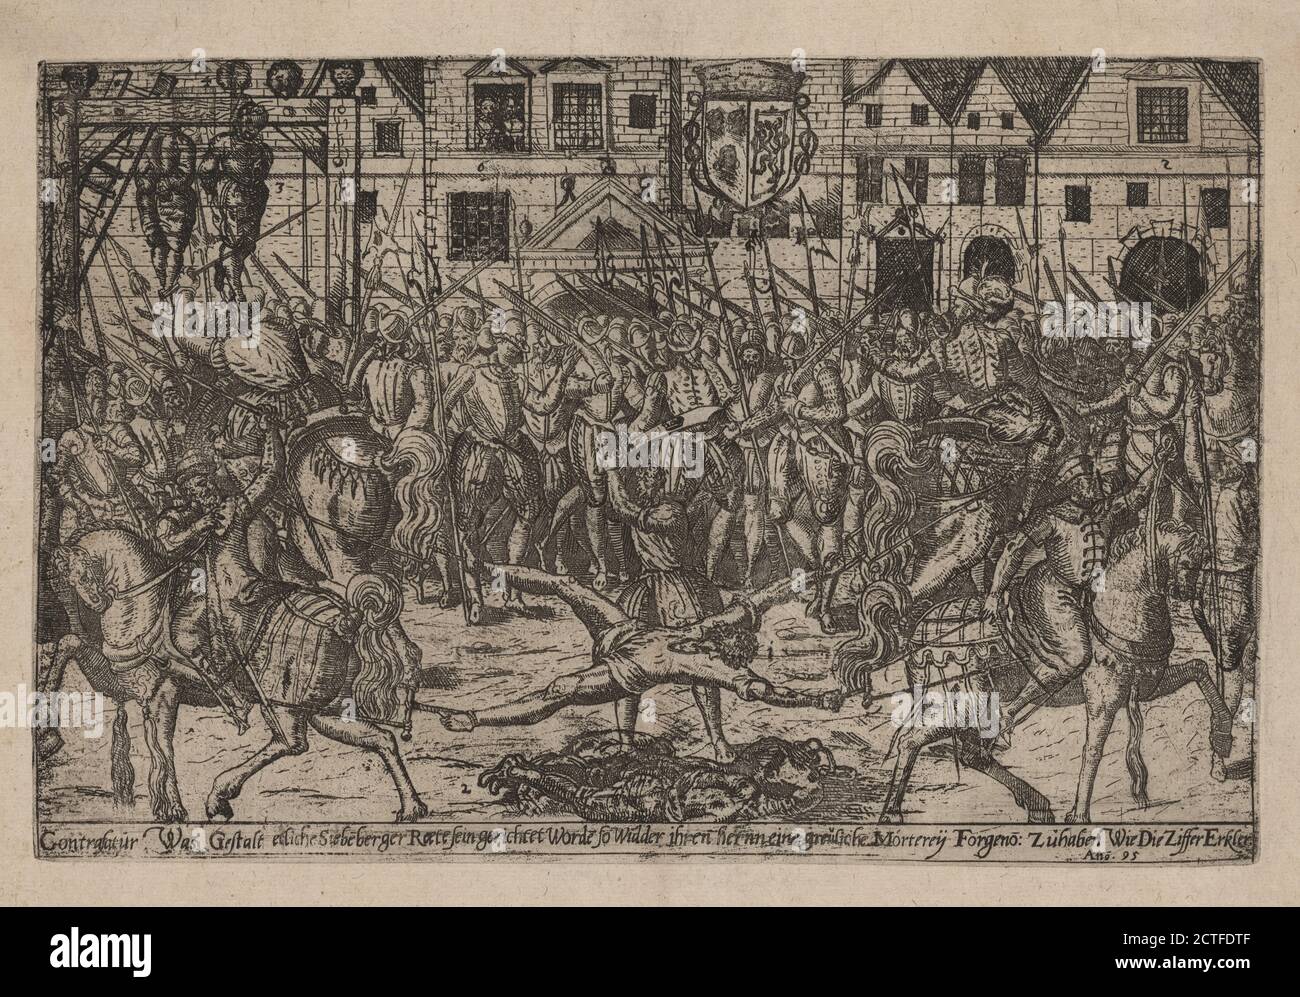 Contrafatur Was Gestalt etliche Siebeberger Raete..., still image, Prints, 1595, Anonymous Stock Photo